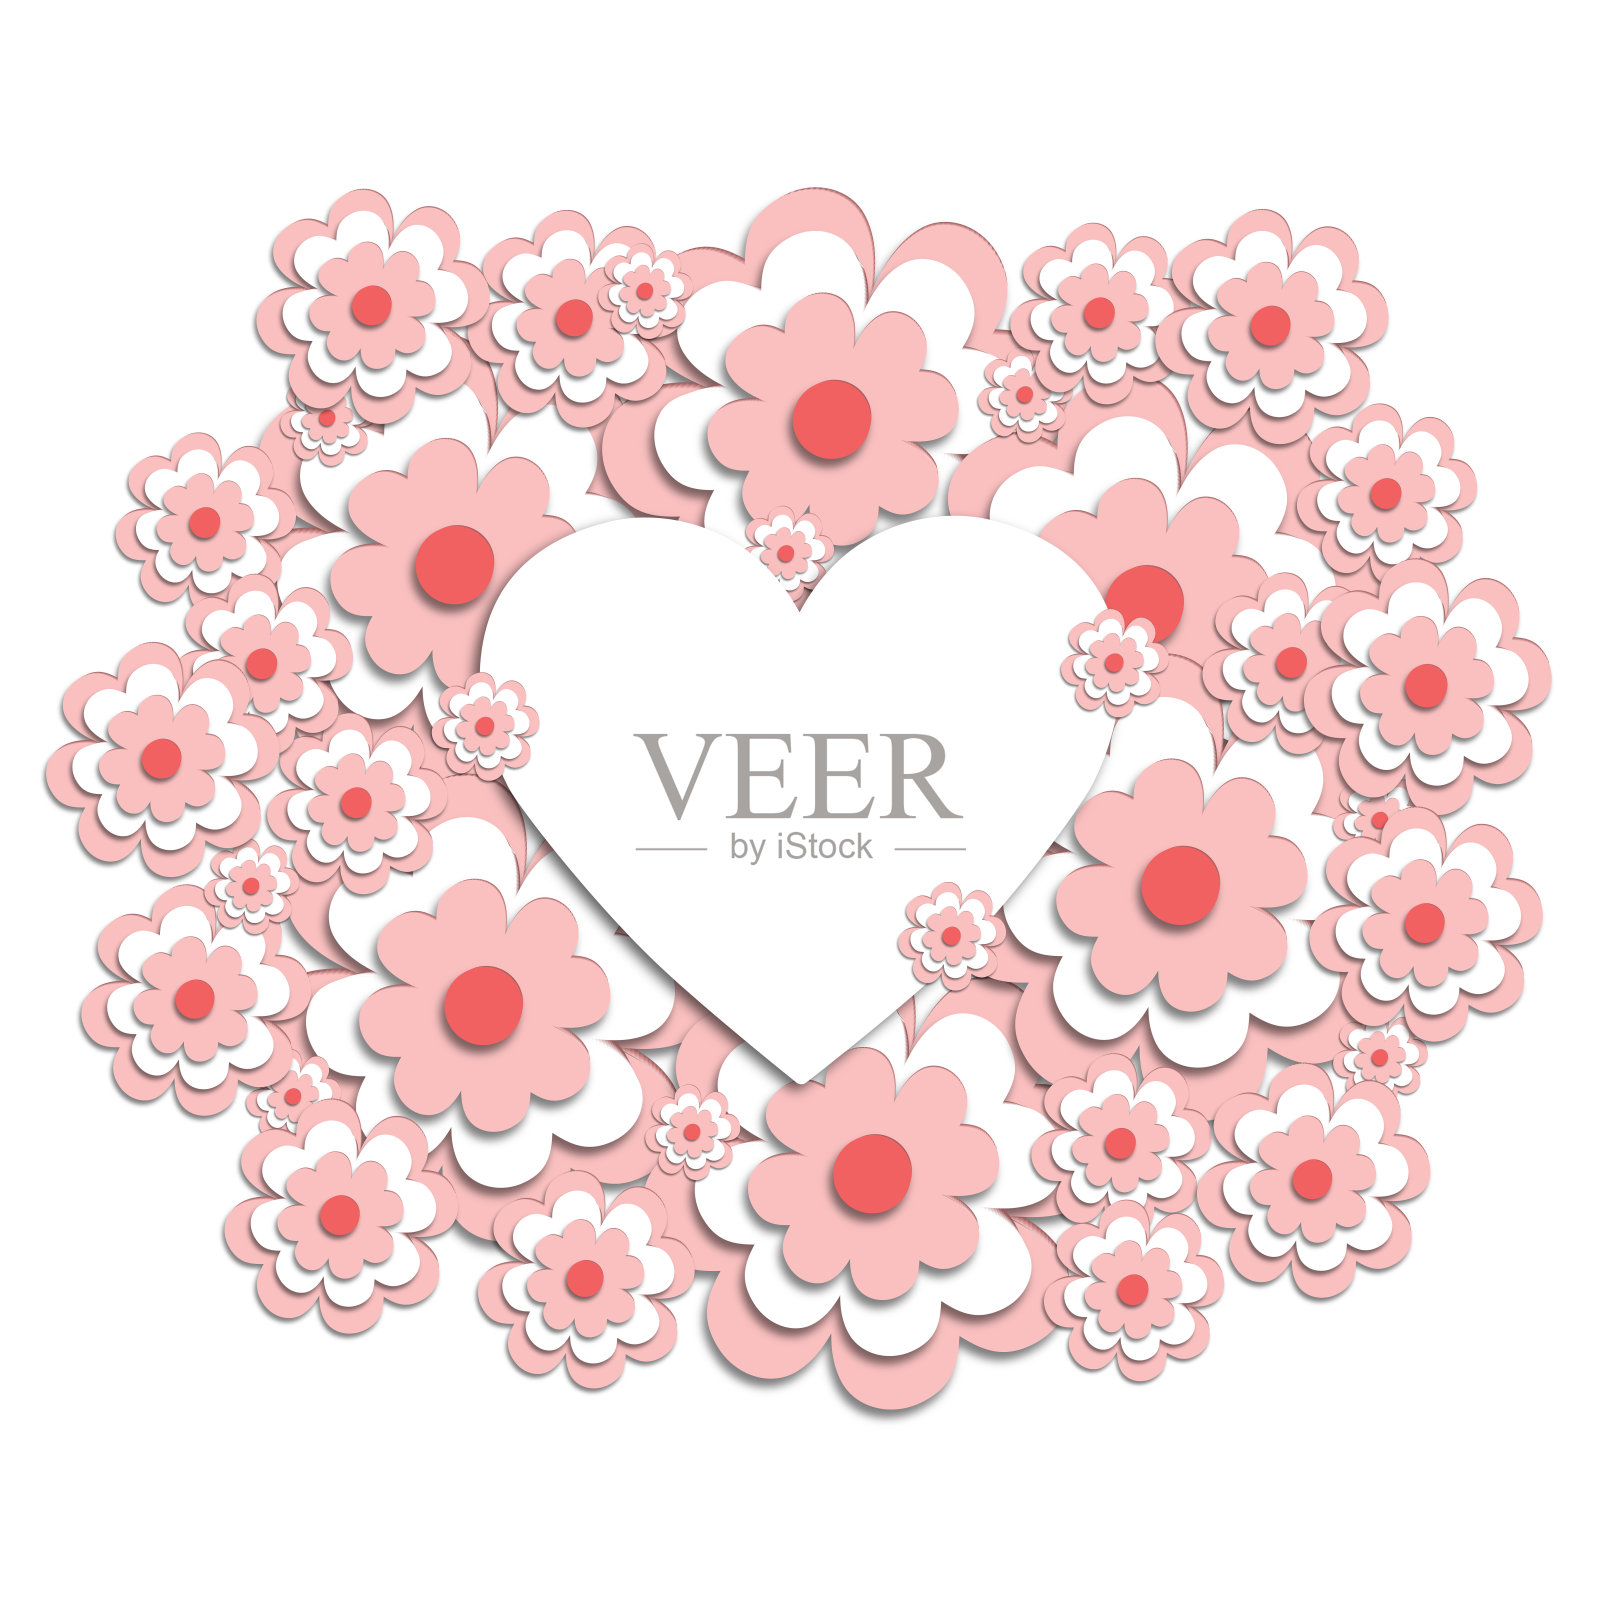 3D粉色樱花围绕心脏。插画图片素材